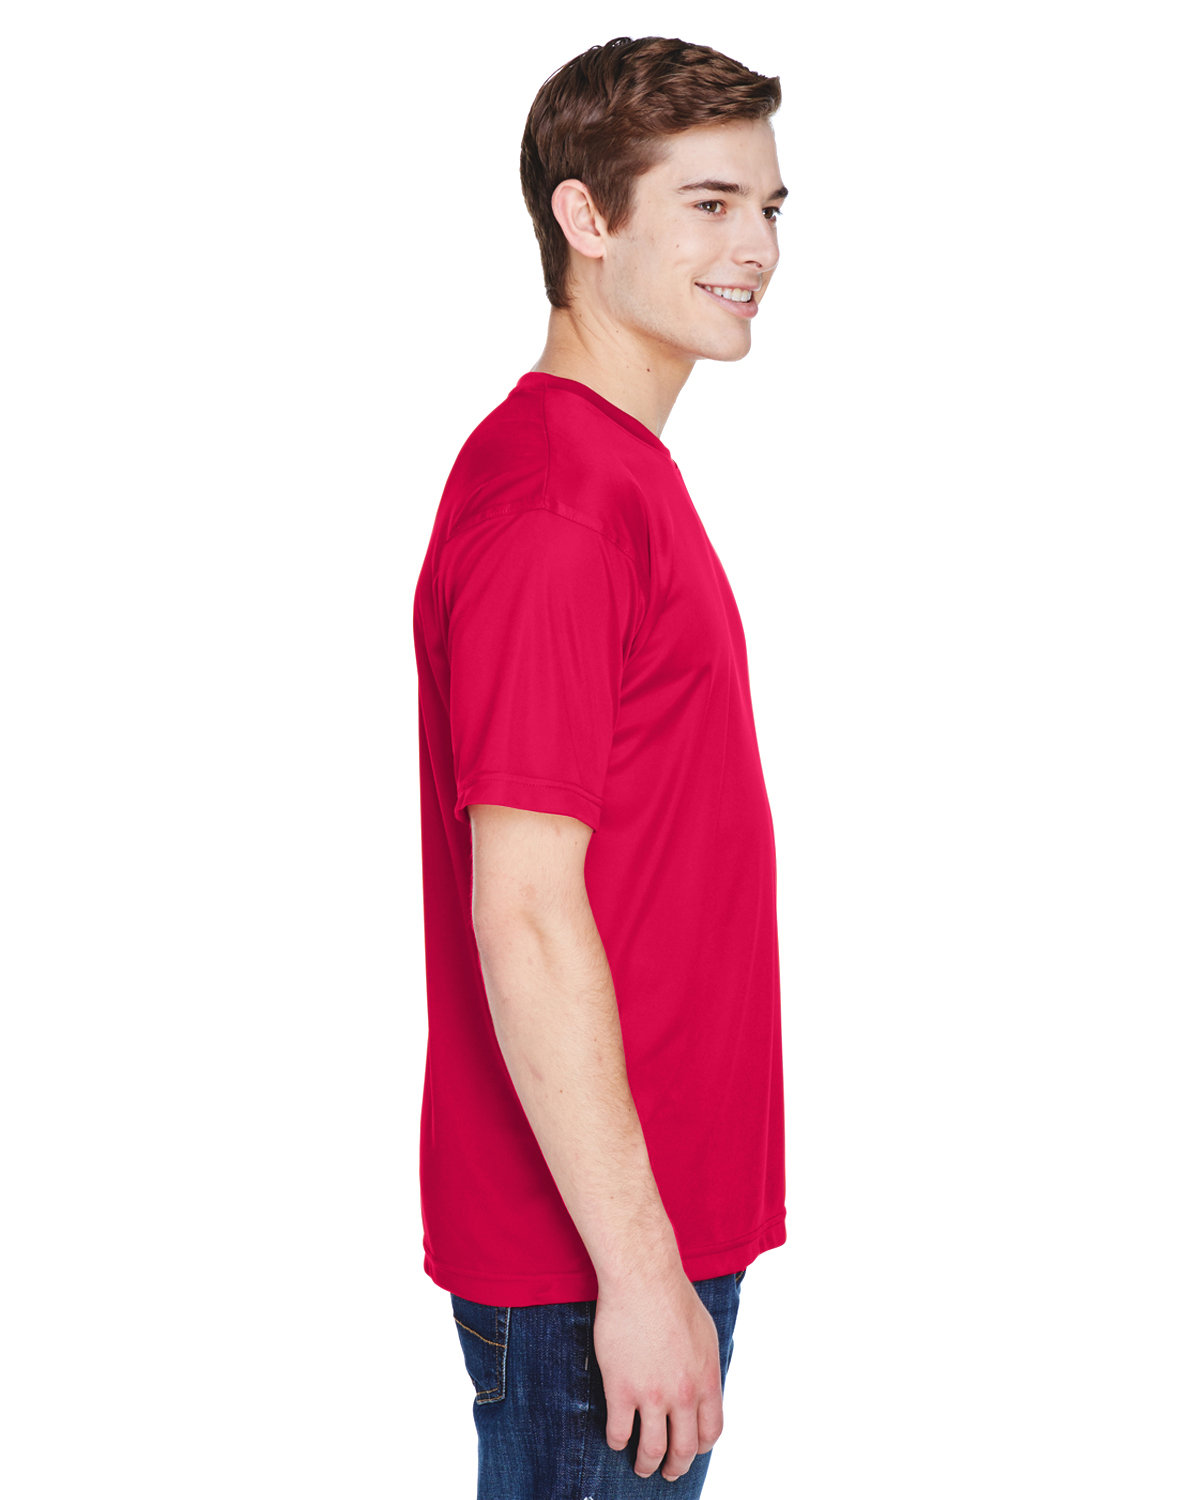 UltraClub Men's Cool & Dry Basic Performance T-Shirt | alphabroder